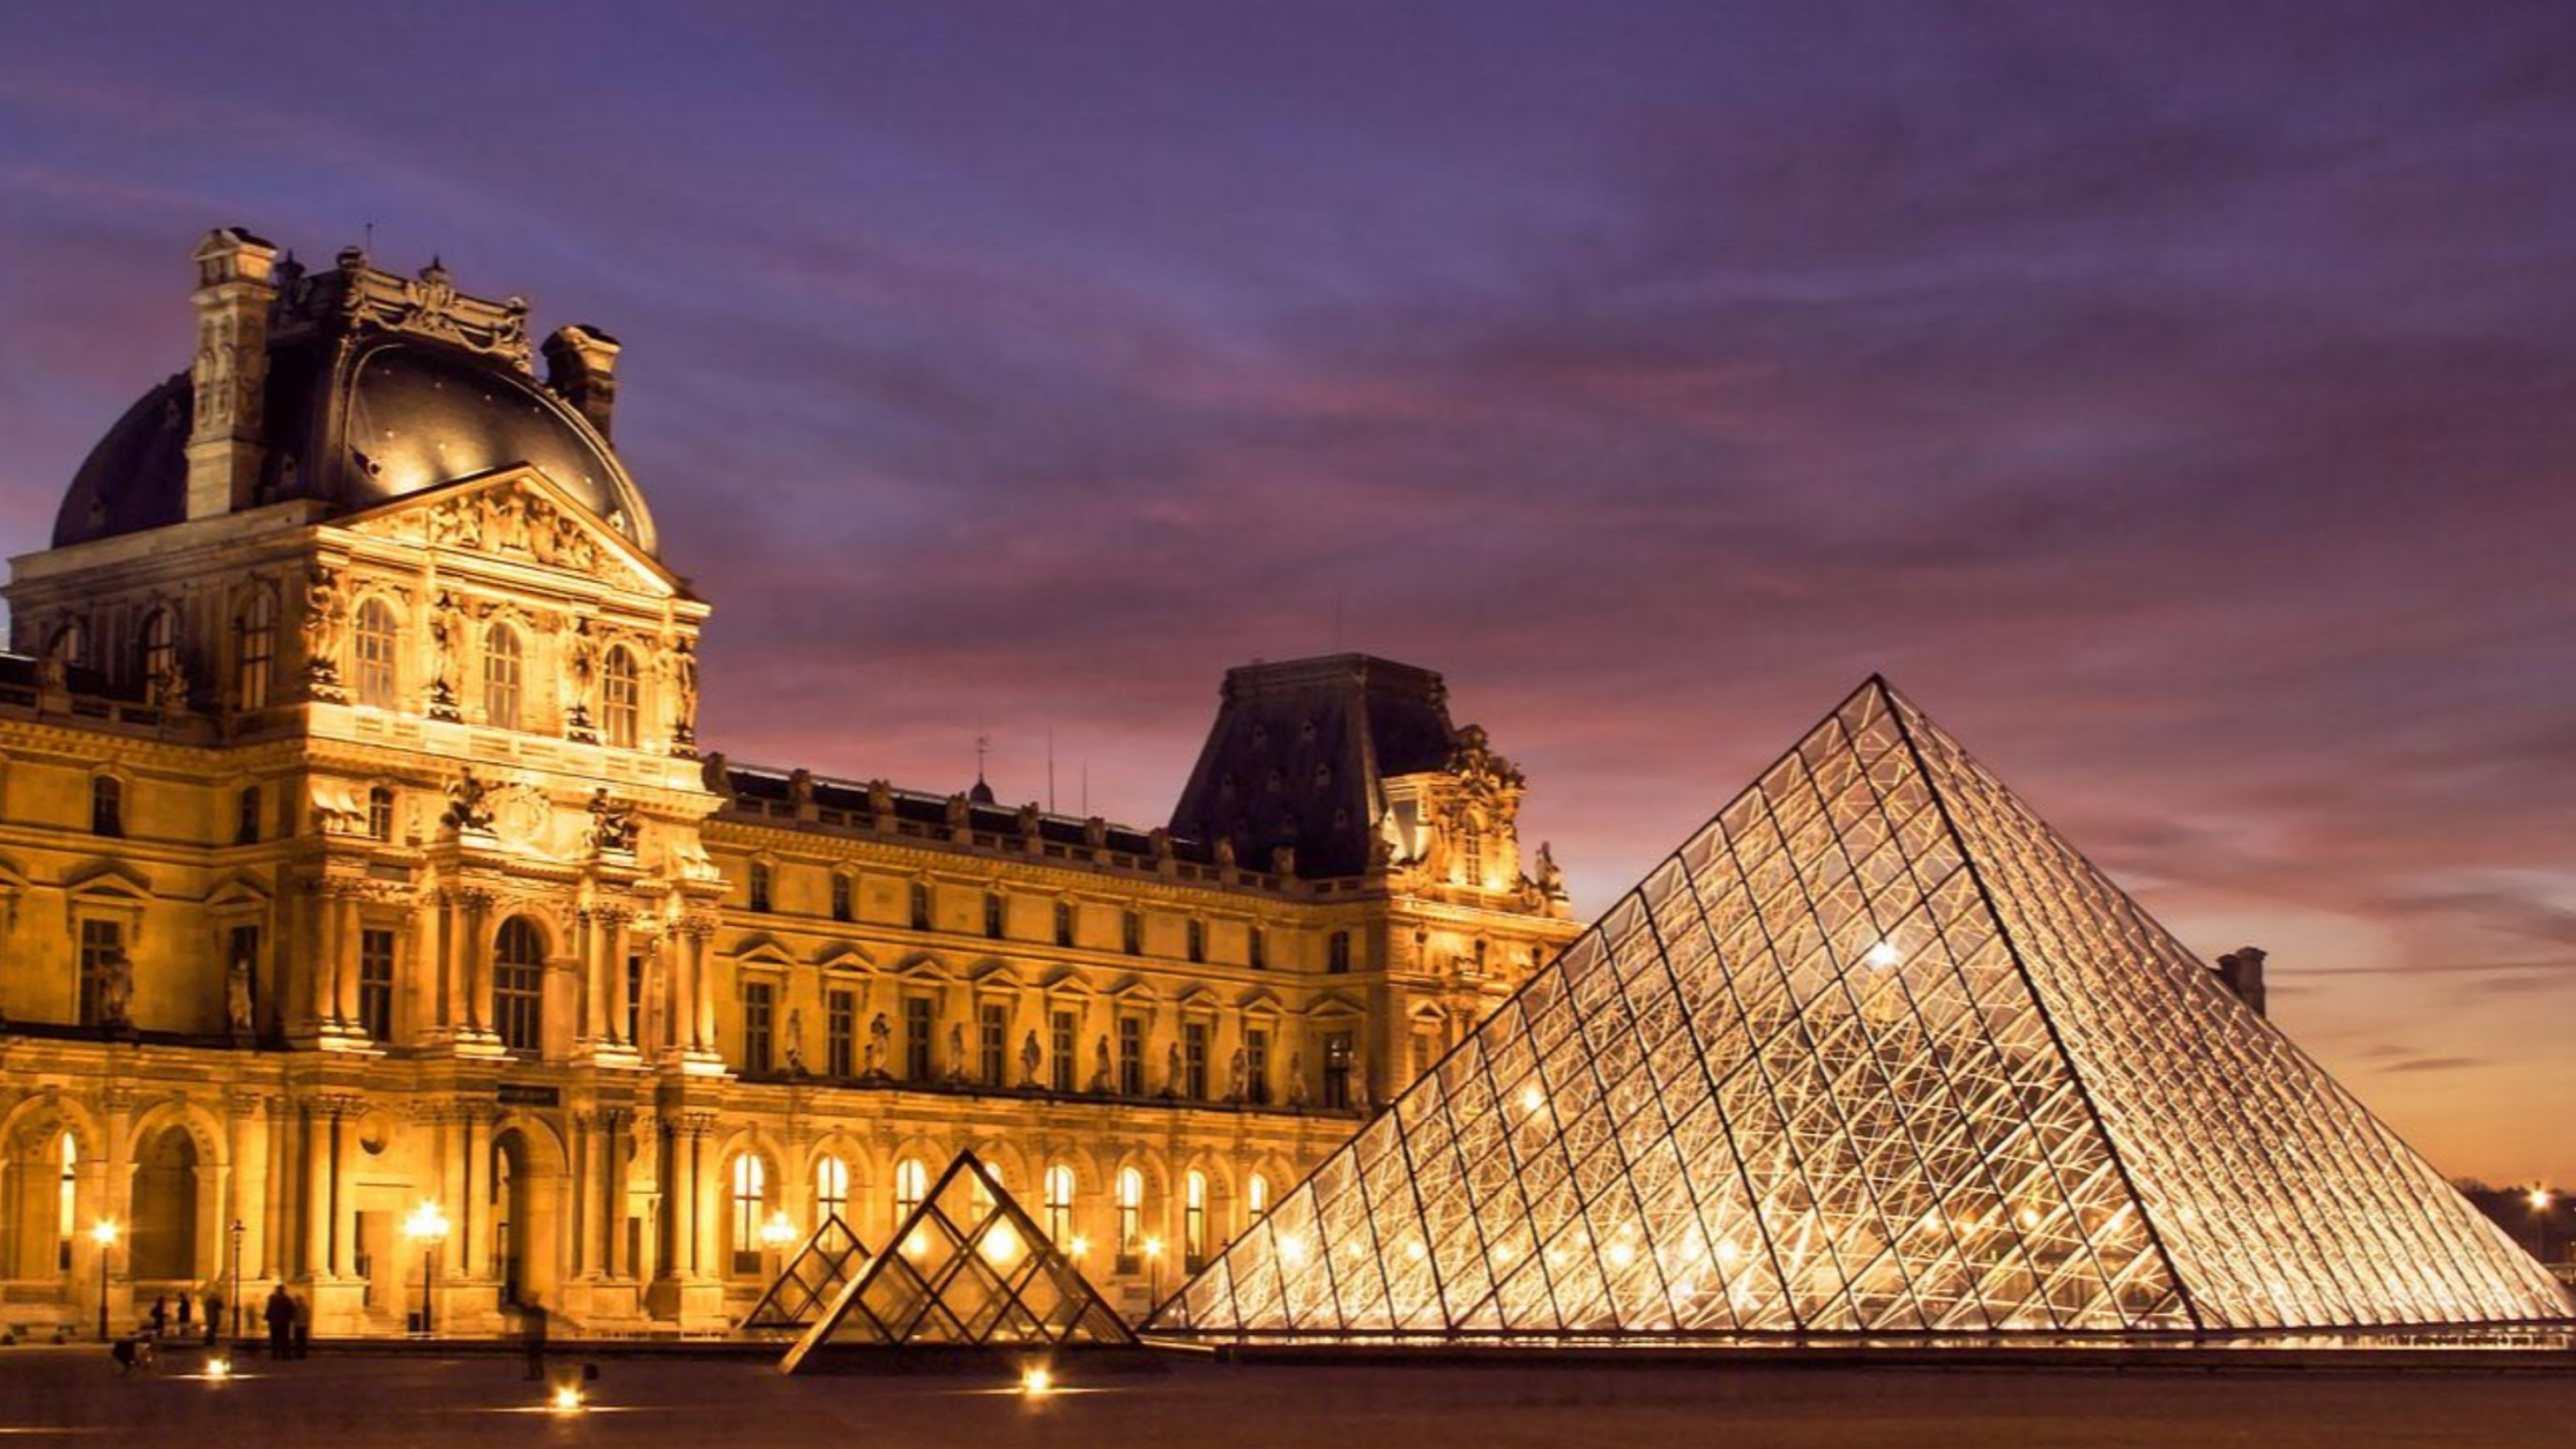 Paris: The world's most-visited museum, Louvre. 3840x2160 4K Wallpaper.